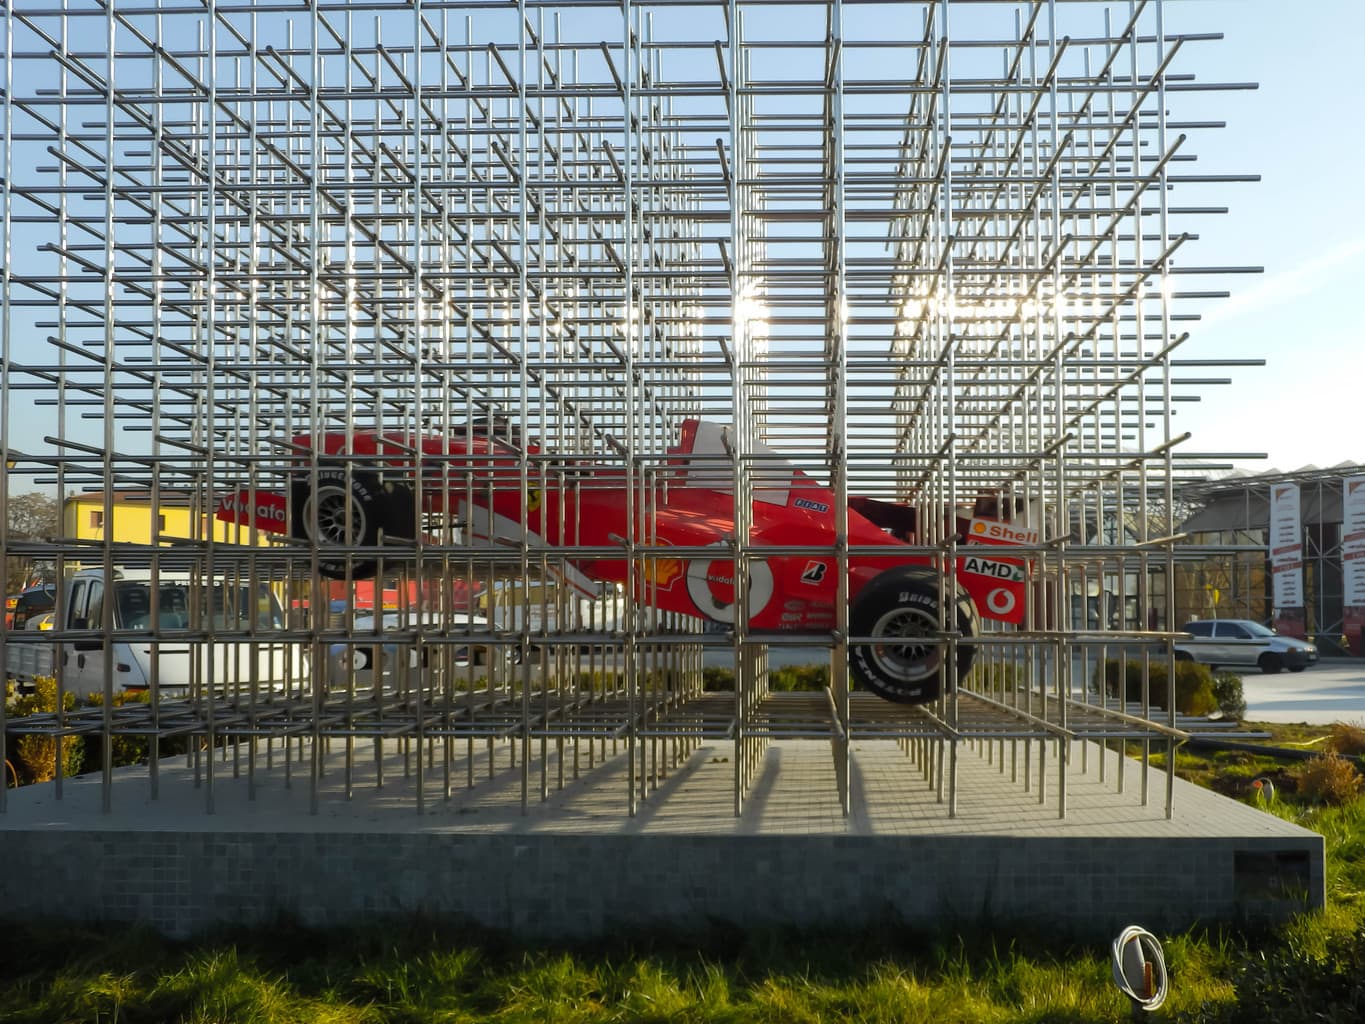 Ferrari Museum in Maranello, Italy